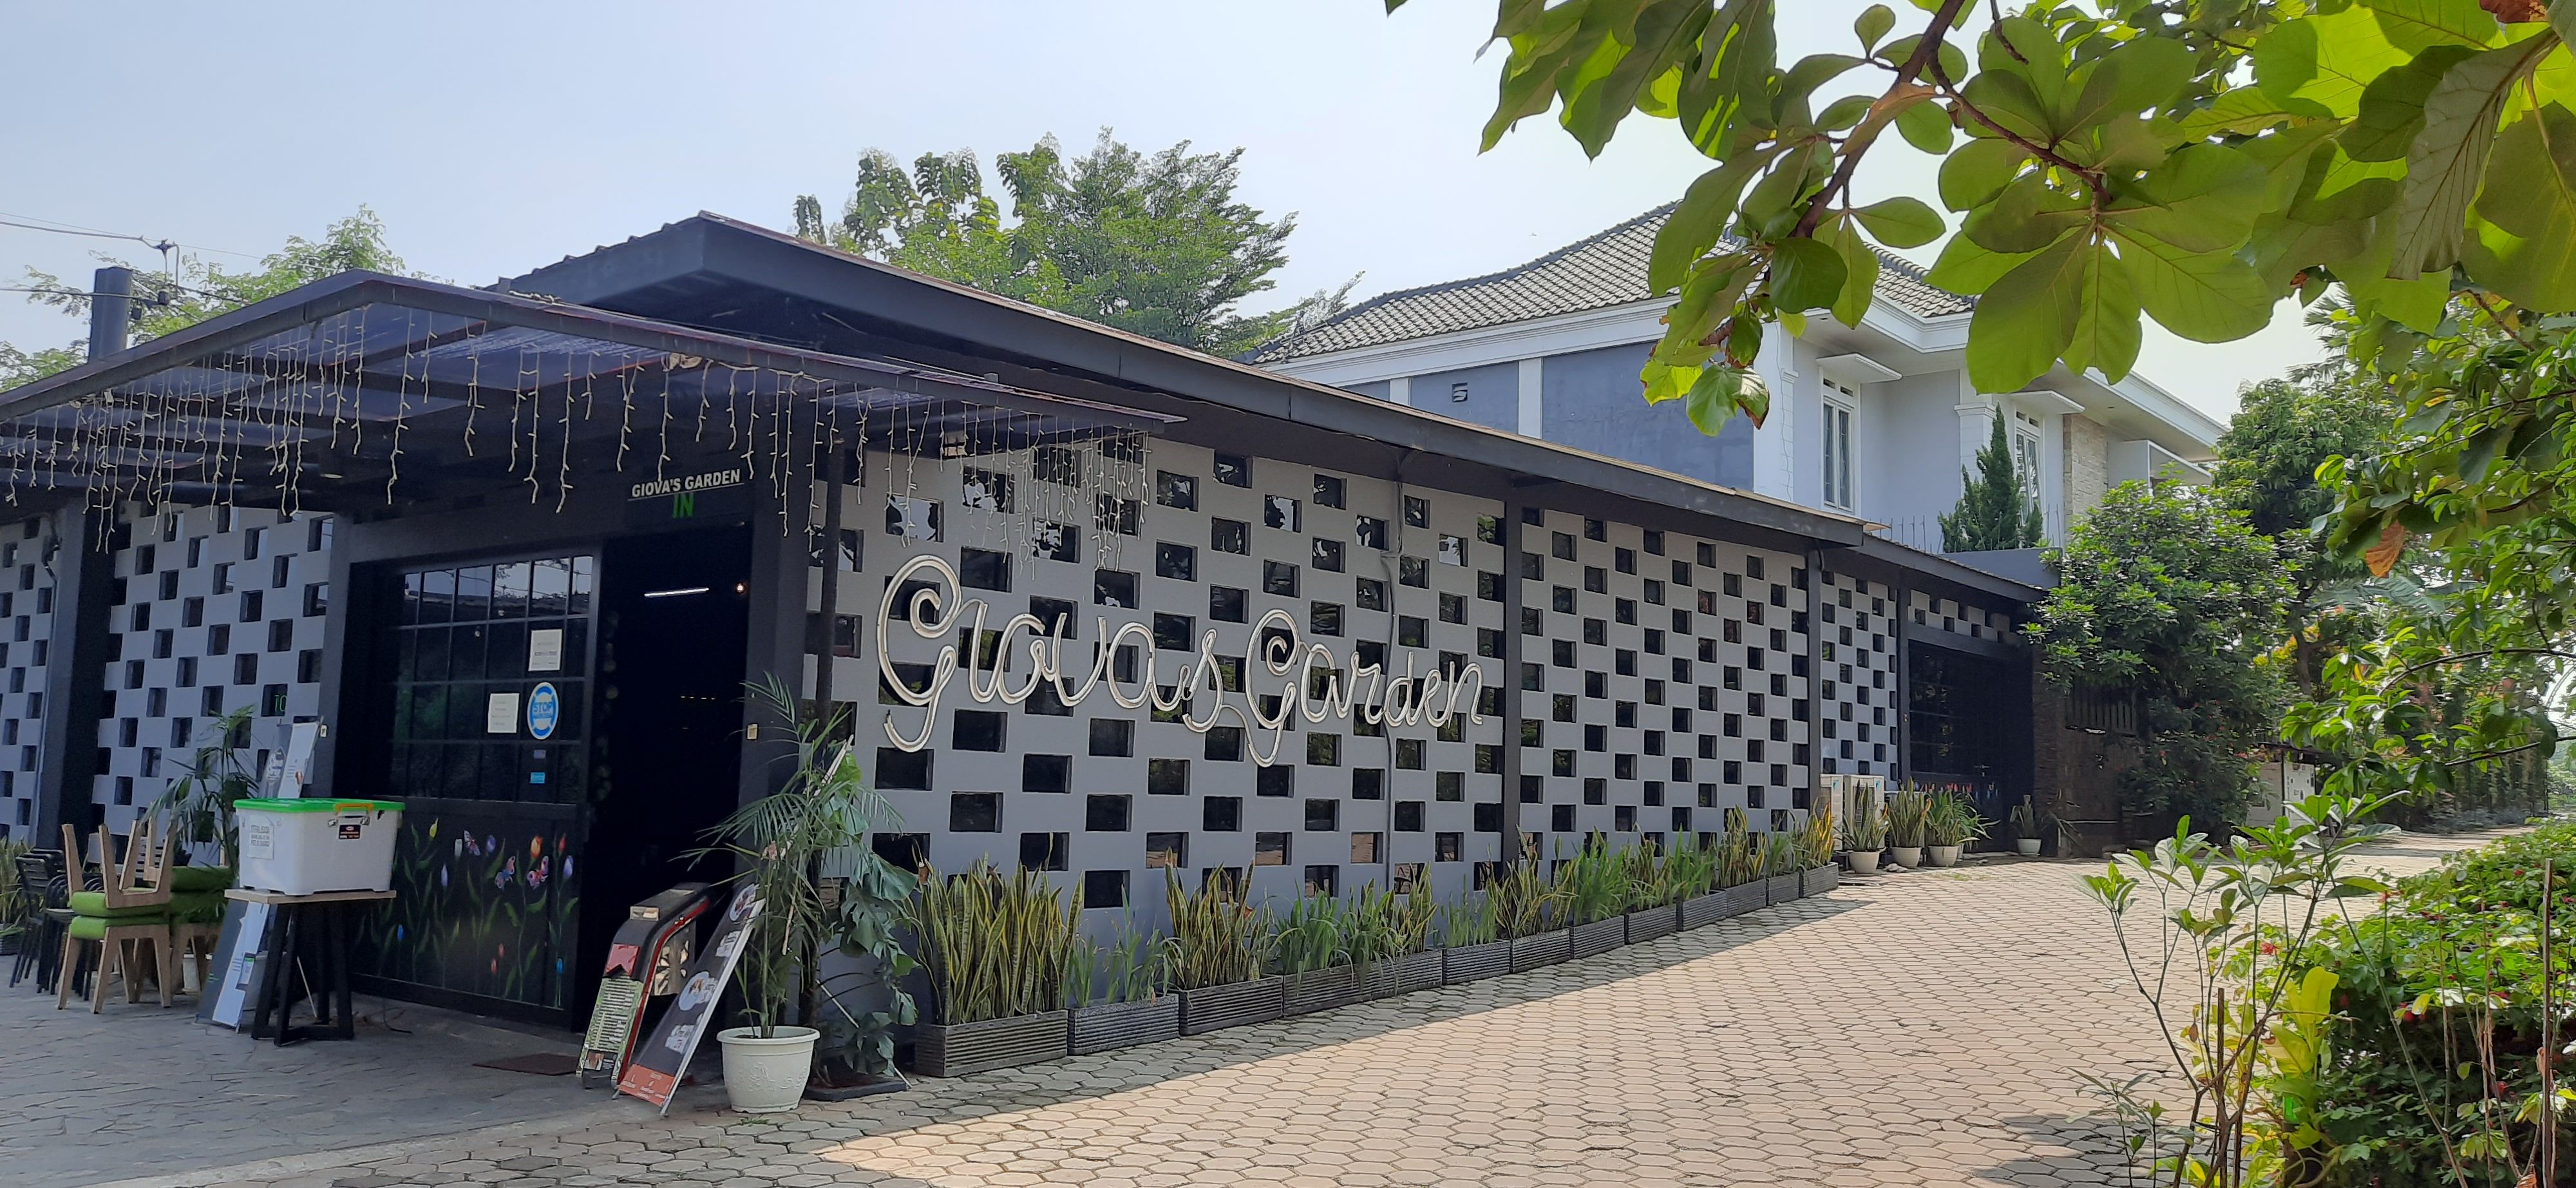 Giova S Garden Cafe Dan Resto Yang Cozy Buat Nongki Di Kabupaten Bogor Halaman 1 Kompasiana Com